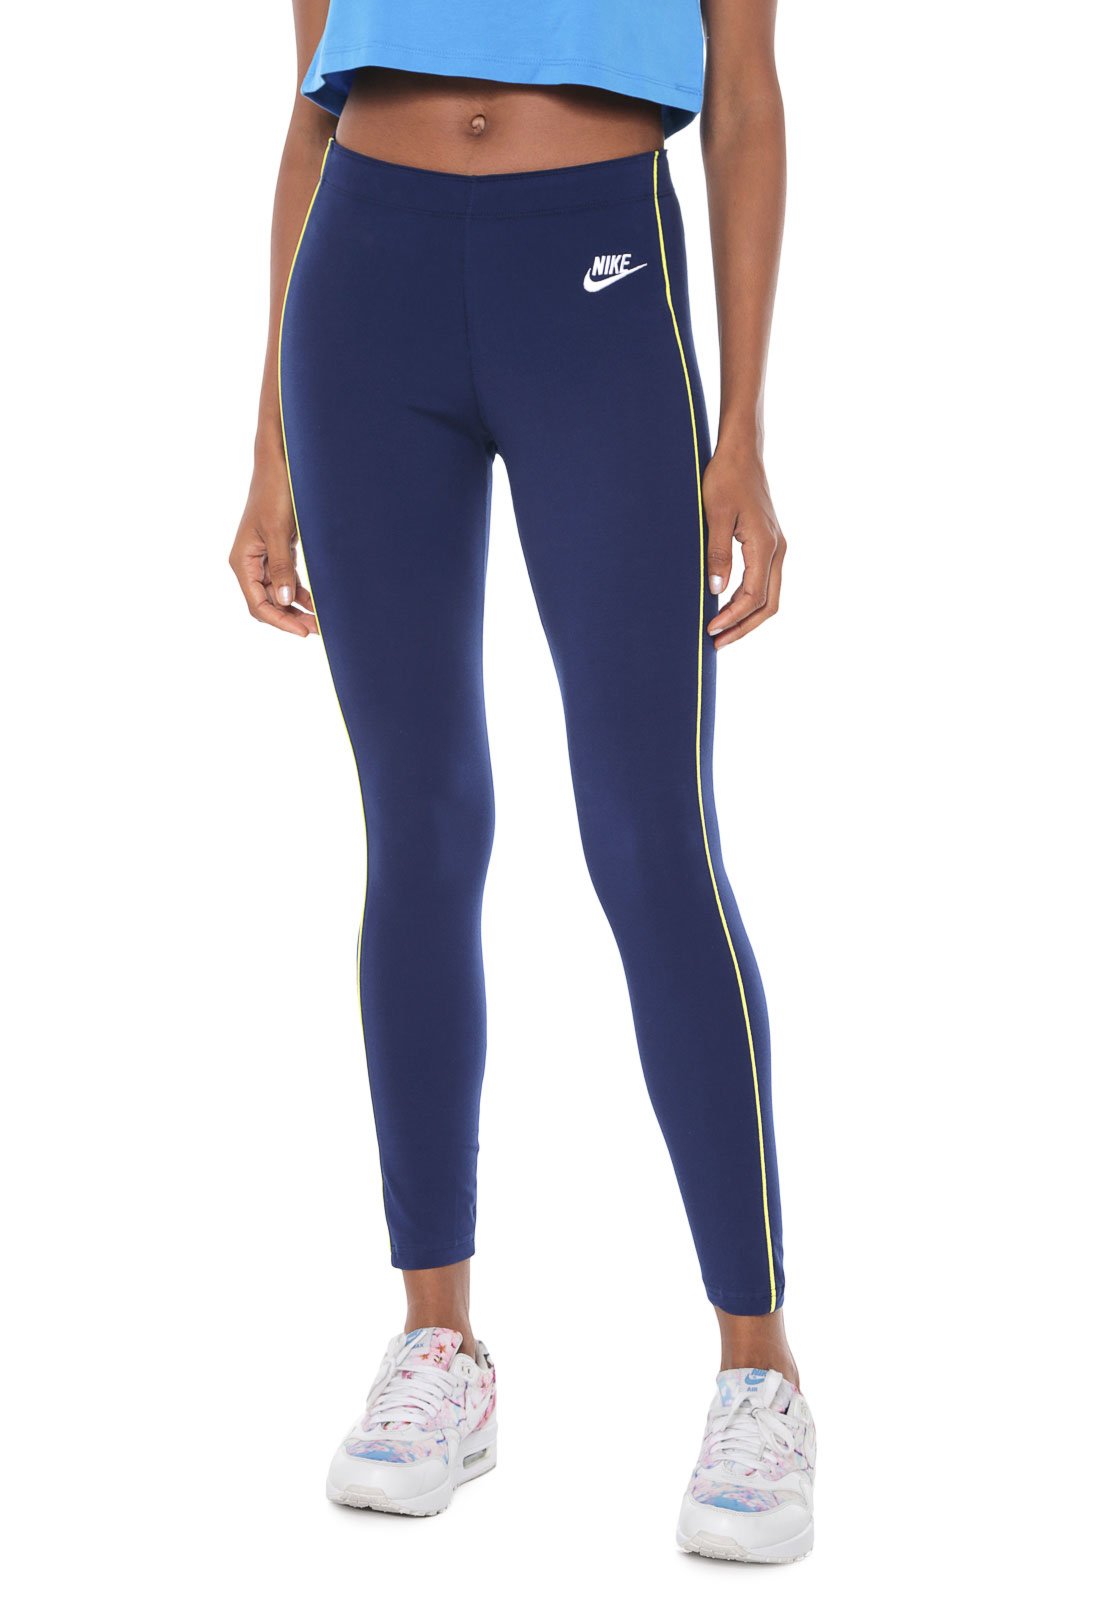 Legging Nike Sportswear Hrtg Azul - Compre Agora